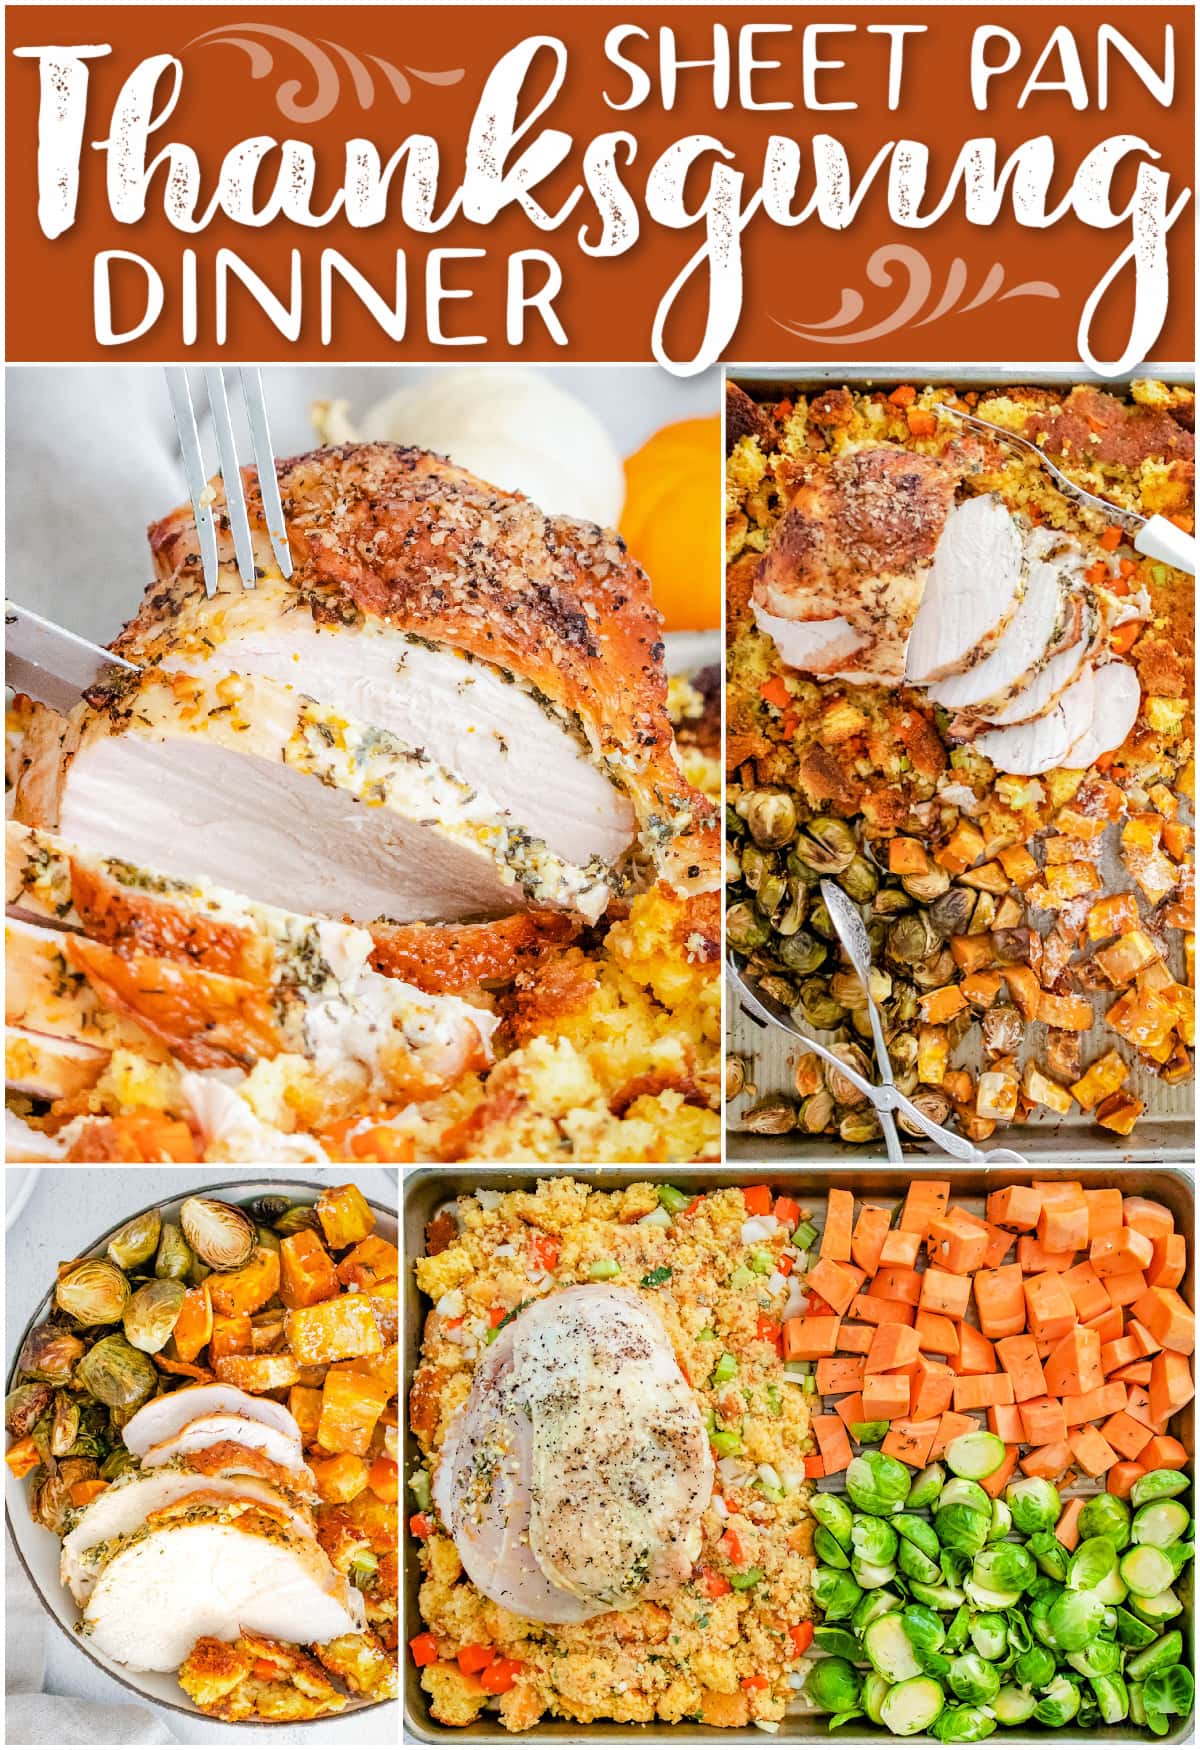 https://www.momontimeout.com/wp-content/uploads/2020/11/sheet-pan-thanksgiving-dinner-collage-final.jpg